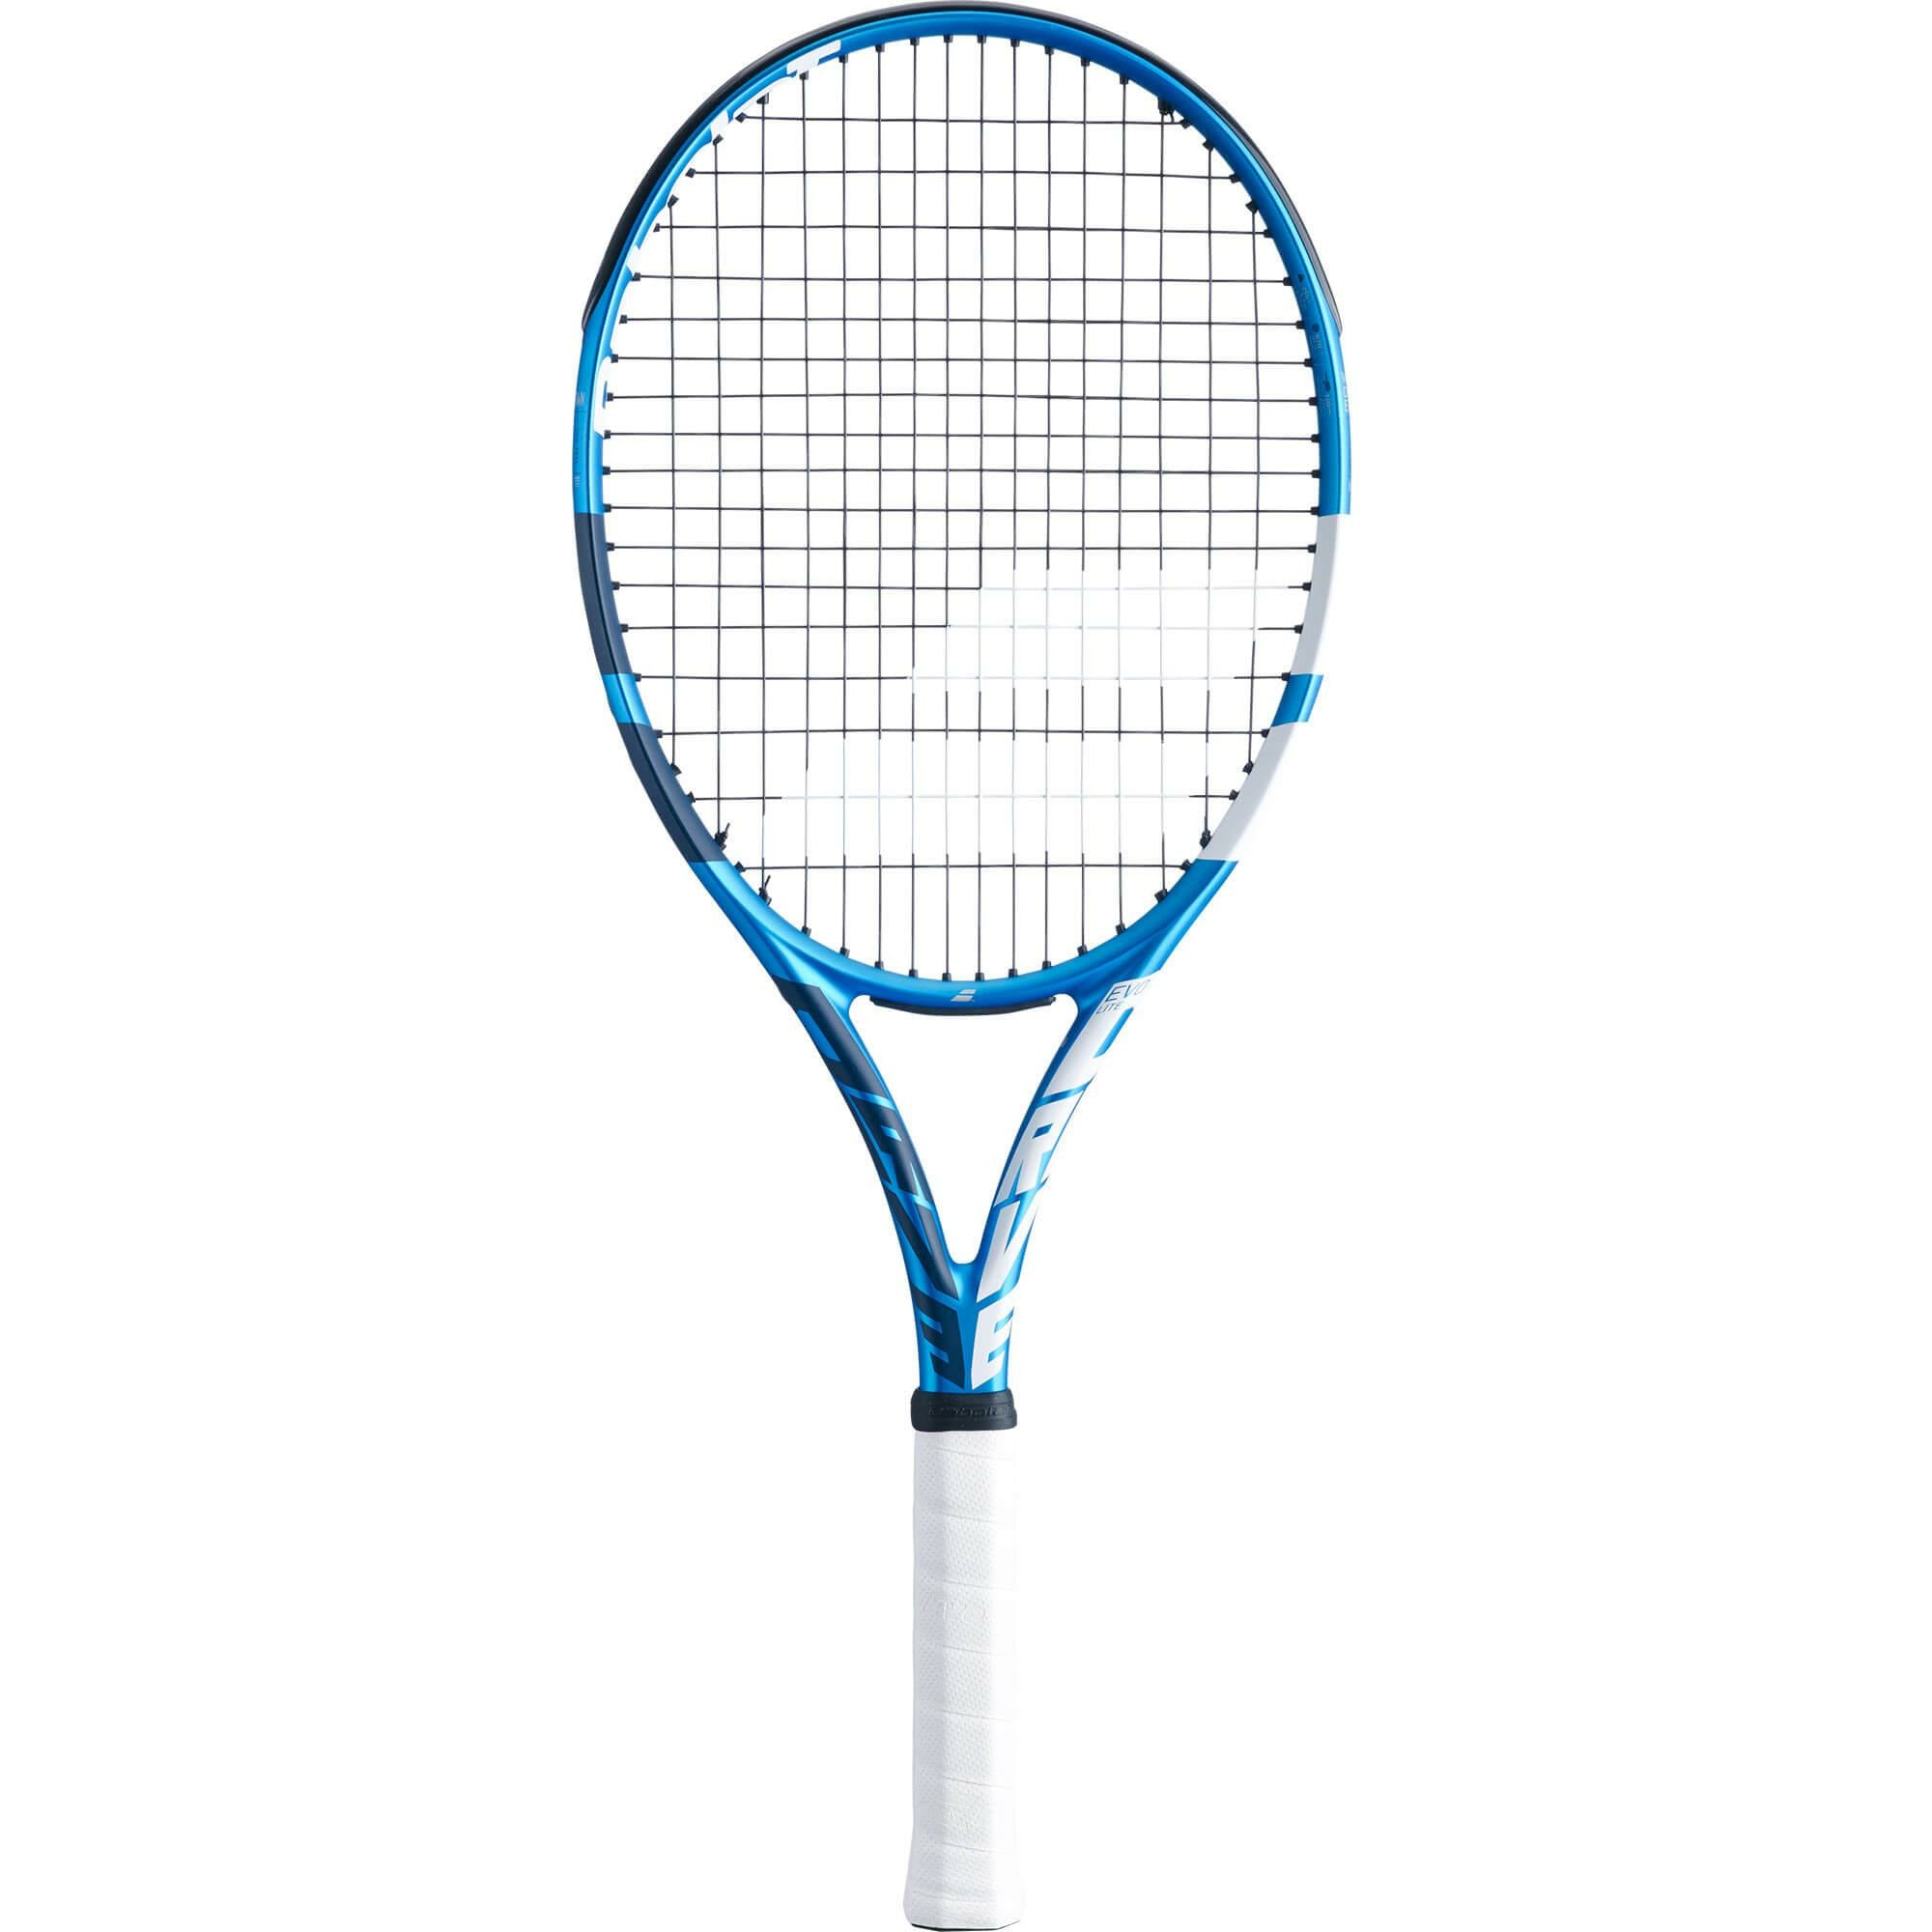 Babolat Evo Drive Lite Tennis Racket - Blue